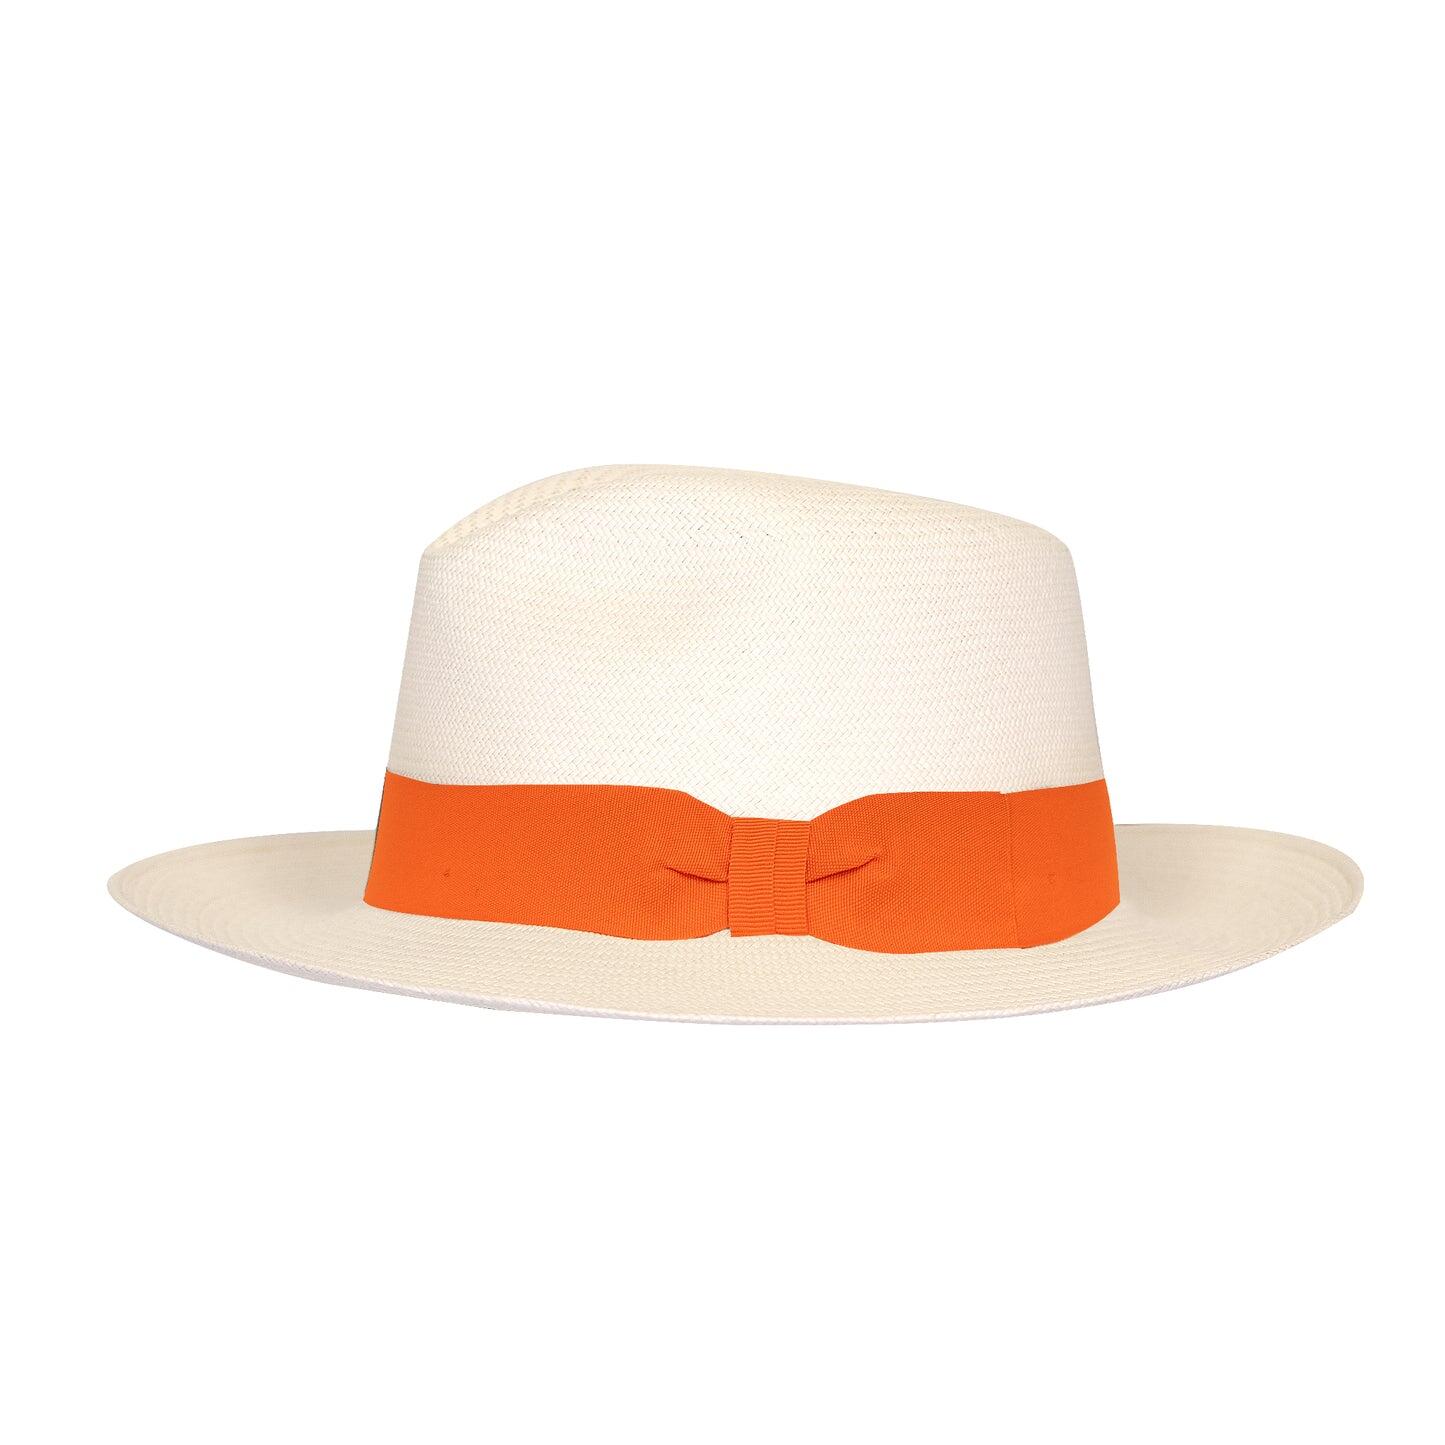 Panama Straw Hat with Orange Band